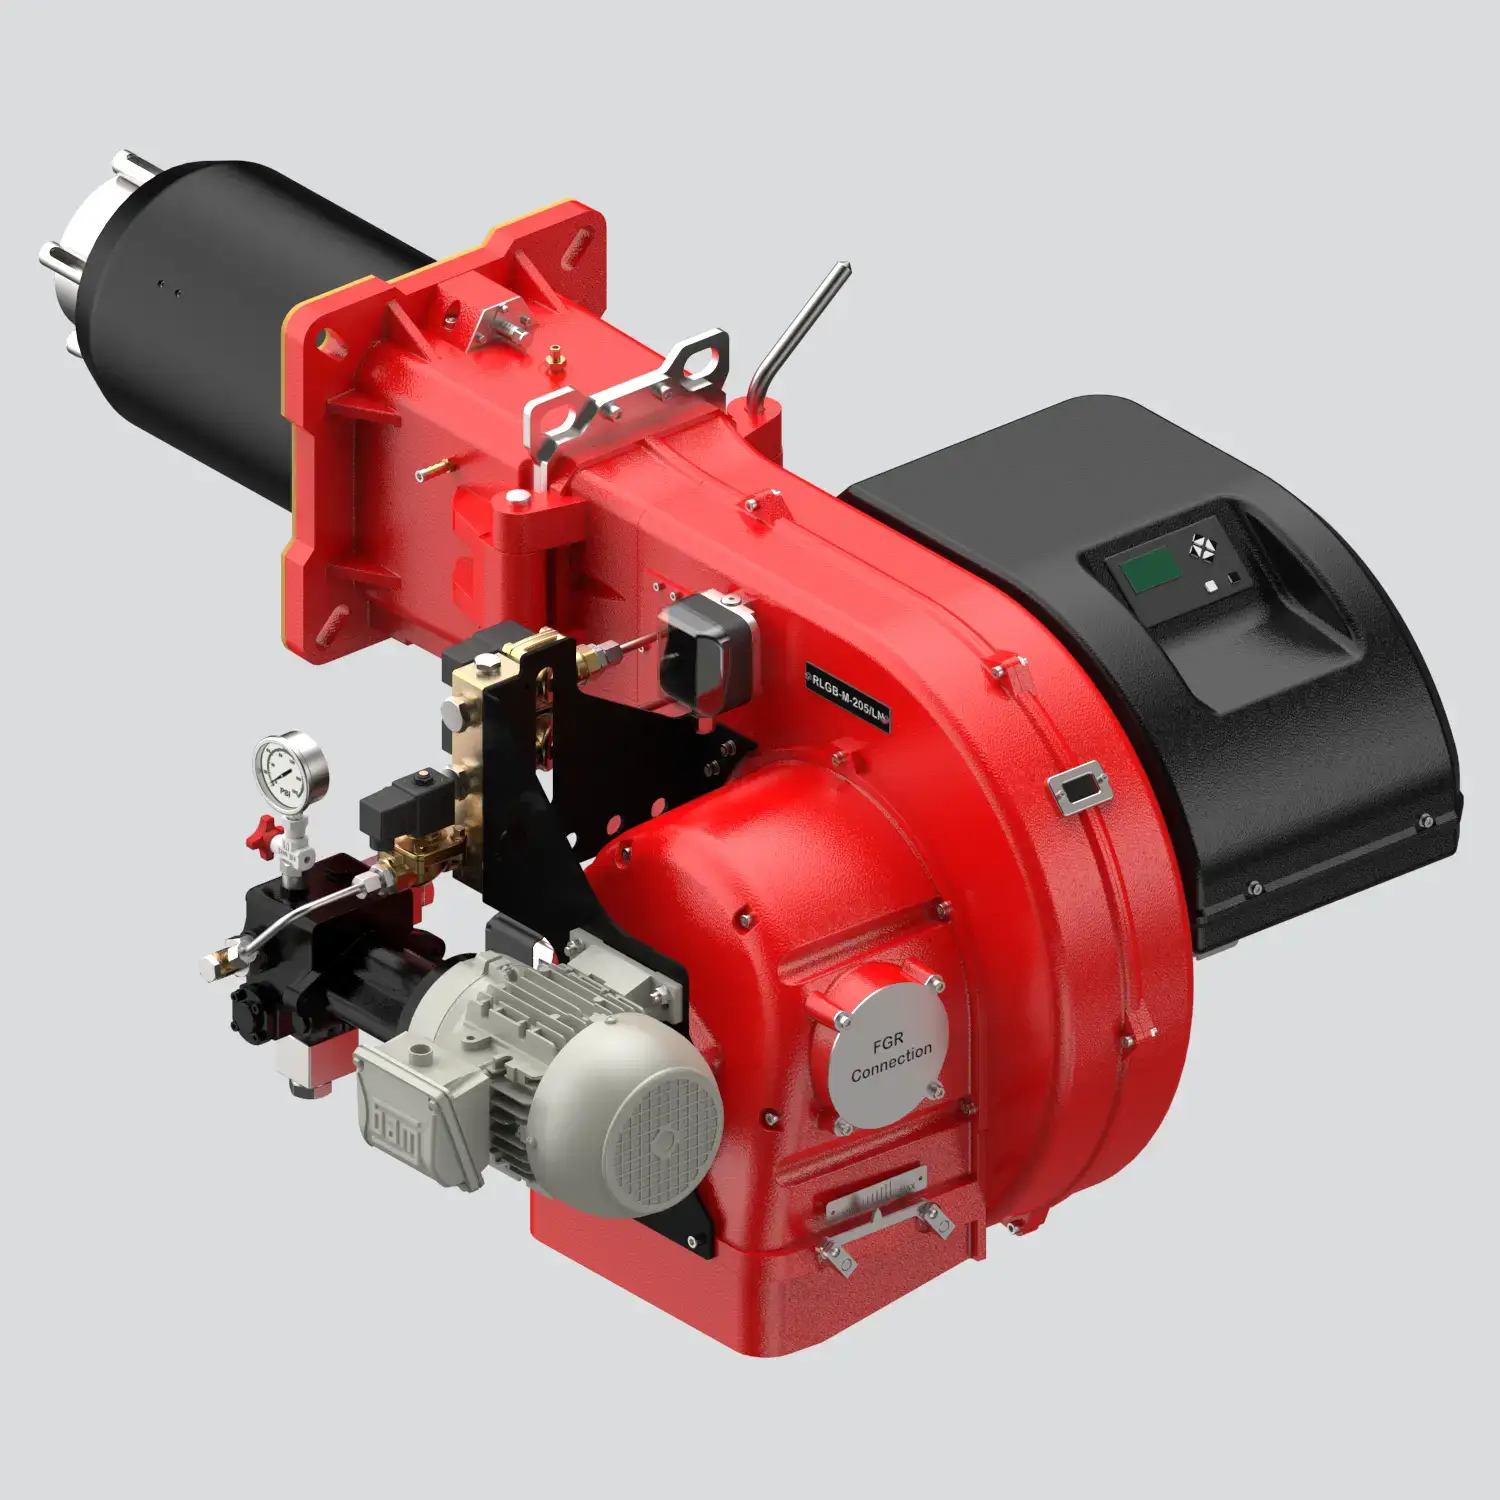 RLGB-M-205-LN-ISO2 monobloc electrical modular dual fuel low NOx burner